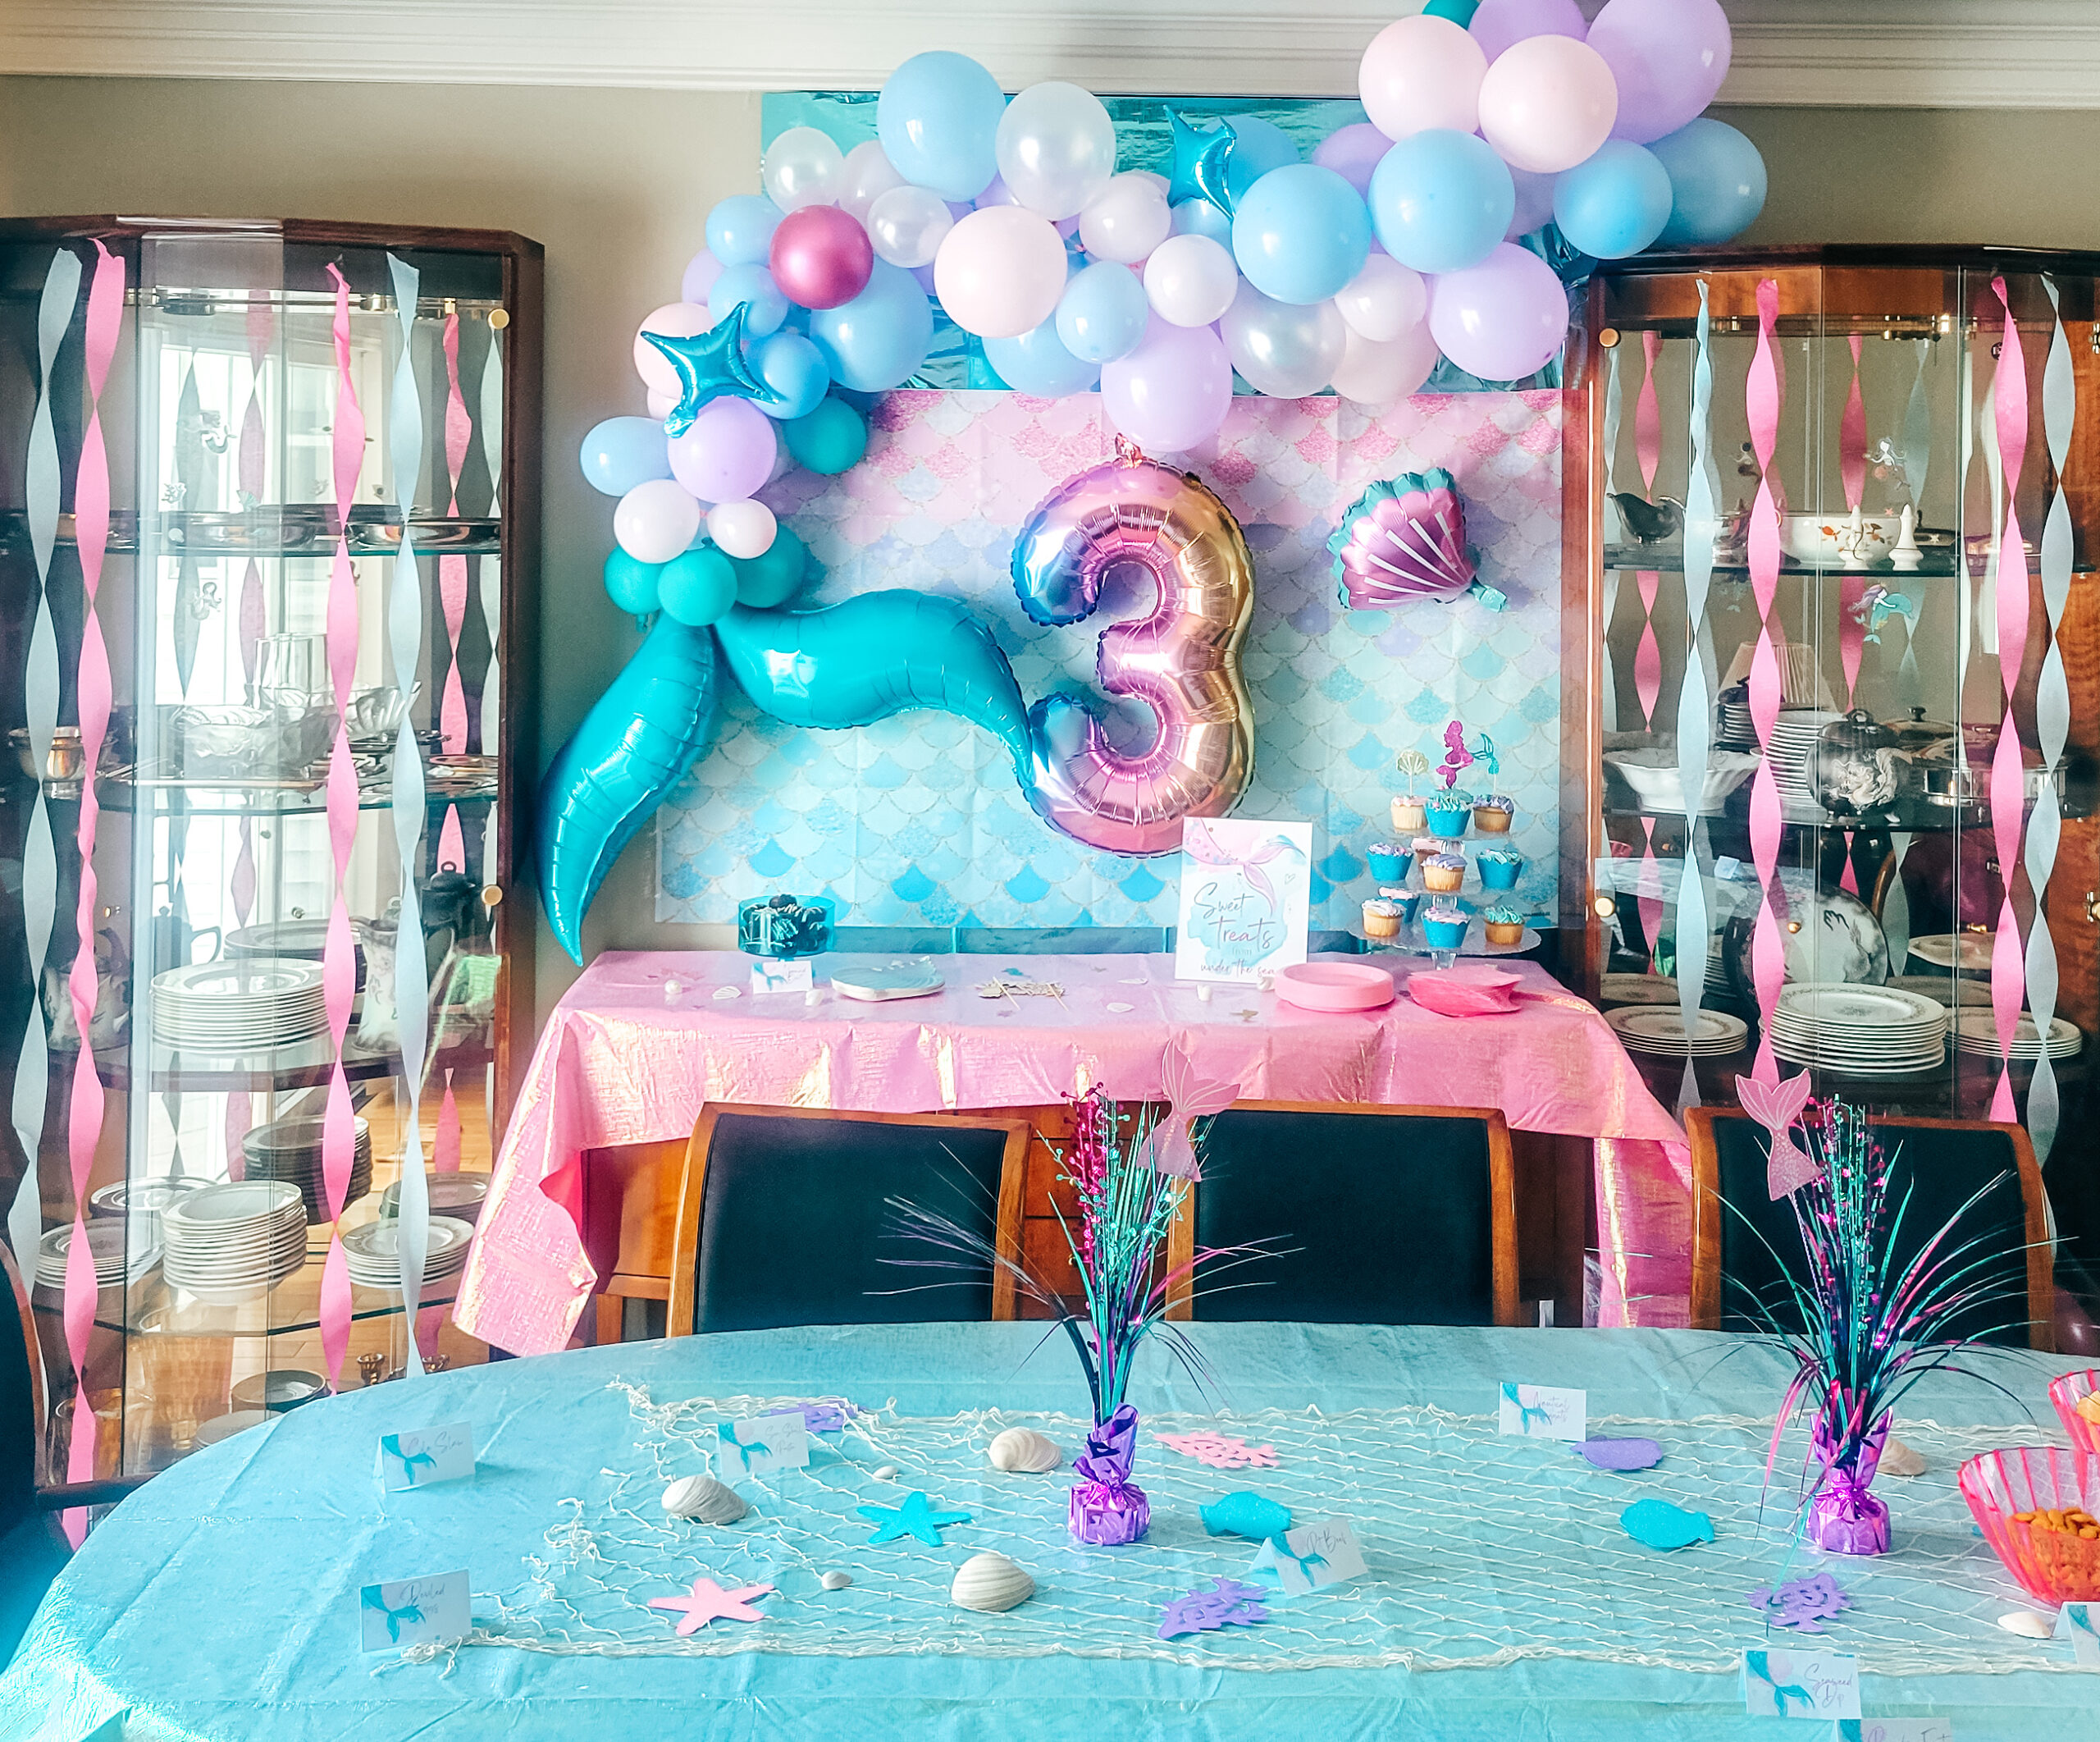 Mermaid Themed Birthday Party: Let's Shellebrate! - Livin My Best